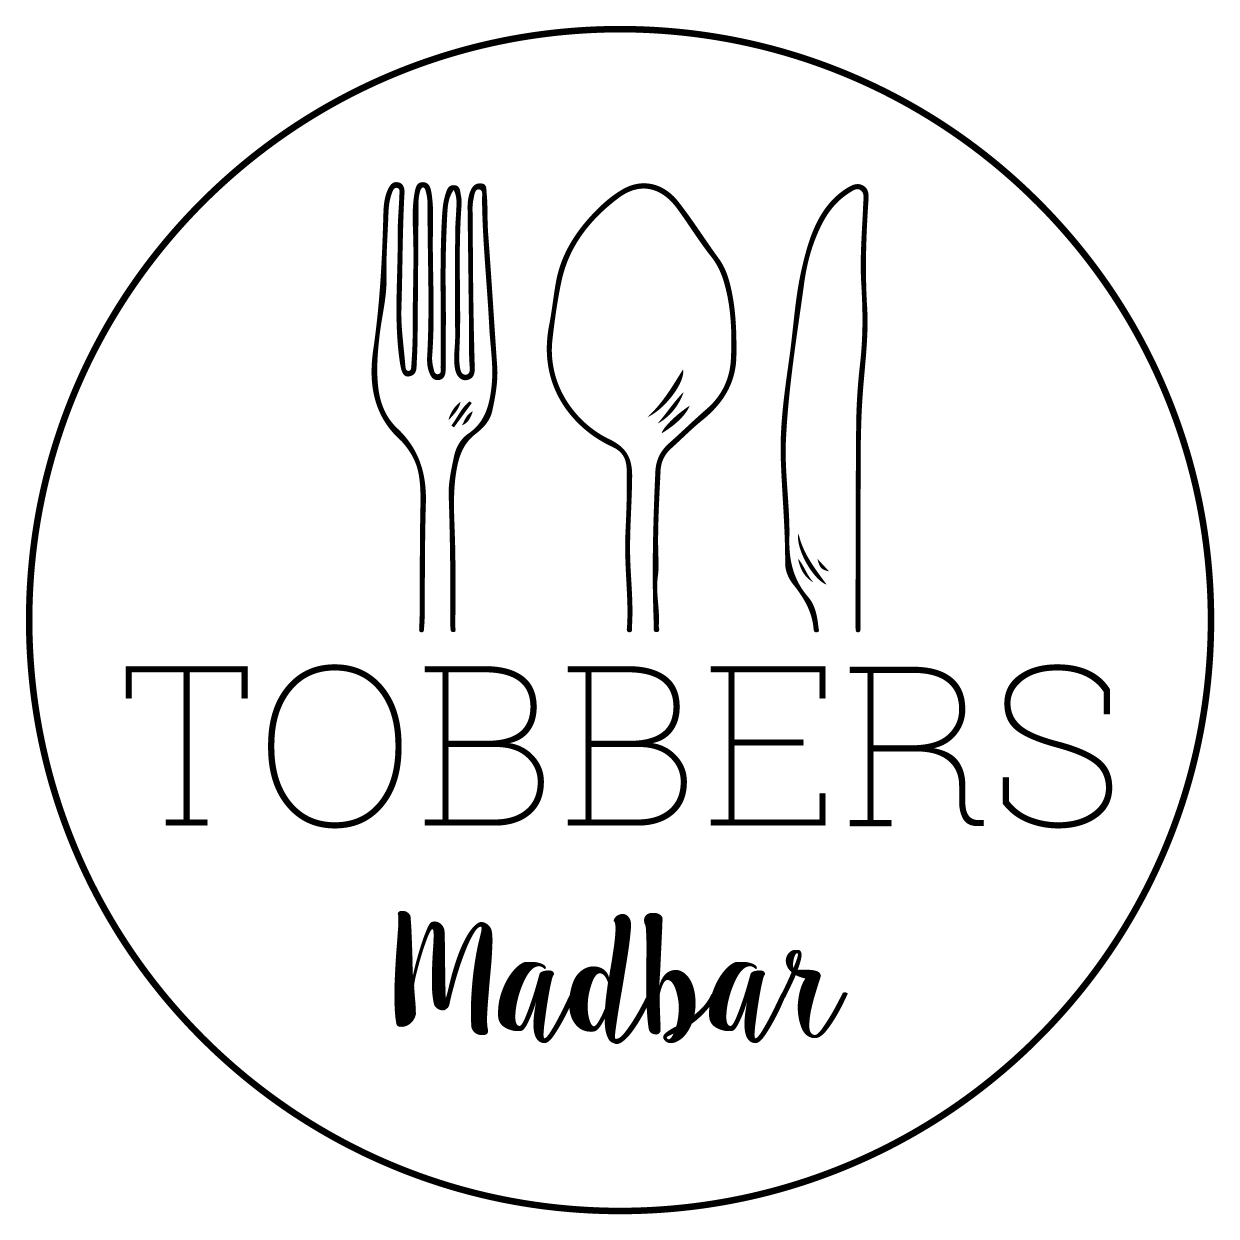 Tobbers Madbar